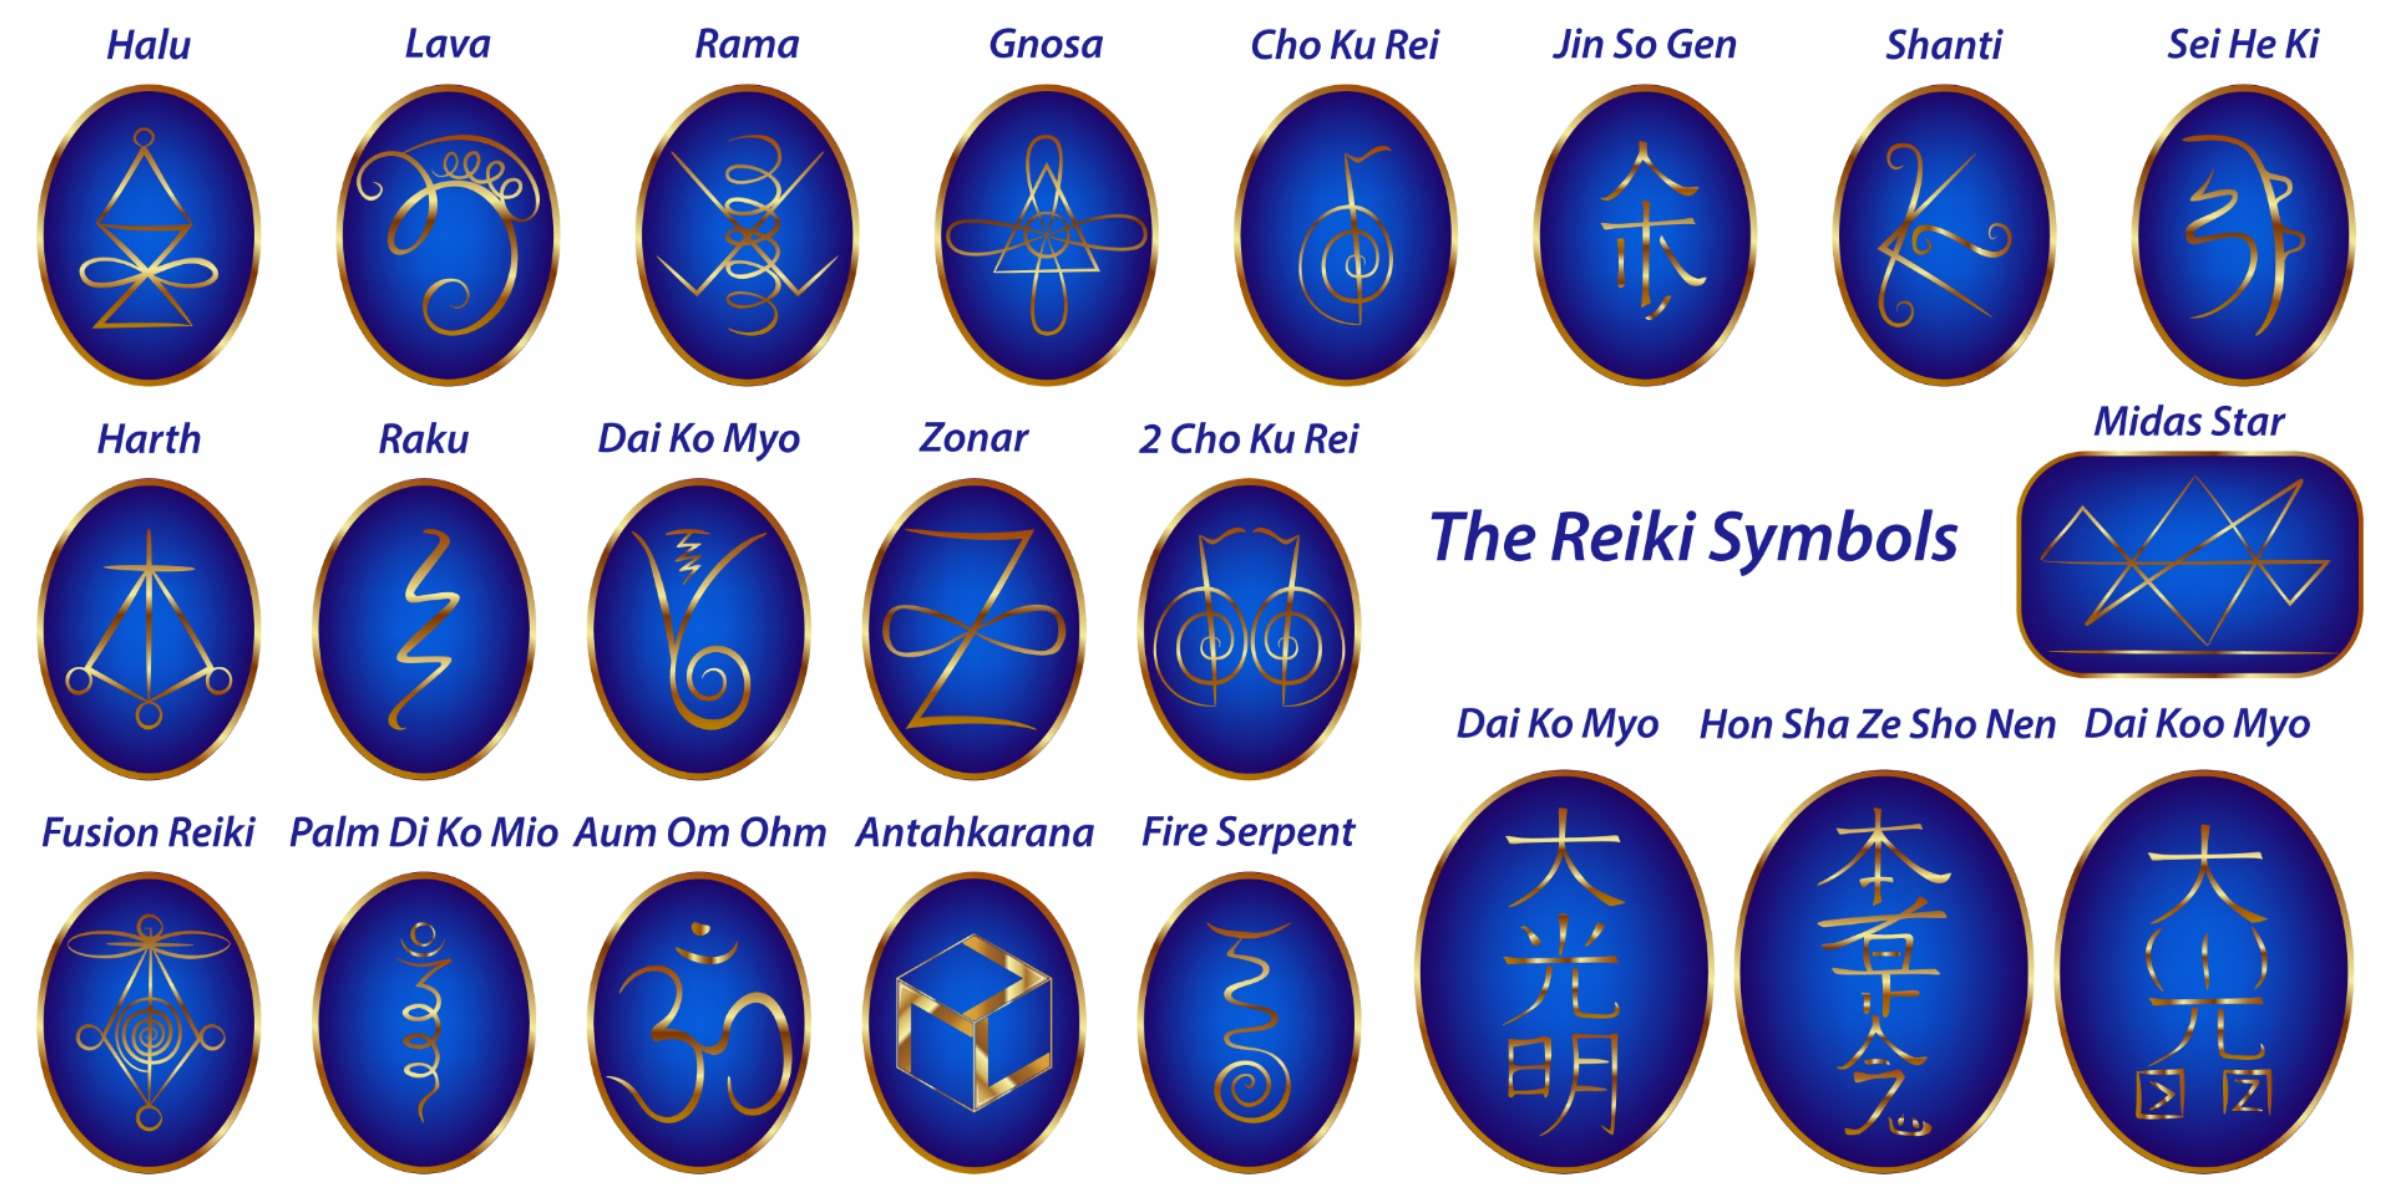 List with the Reiki Symbols